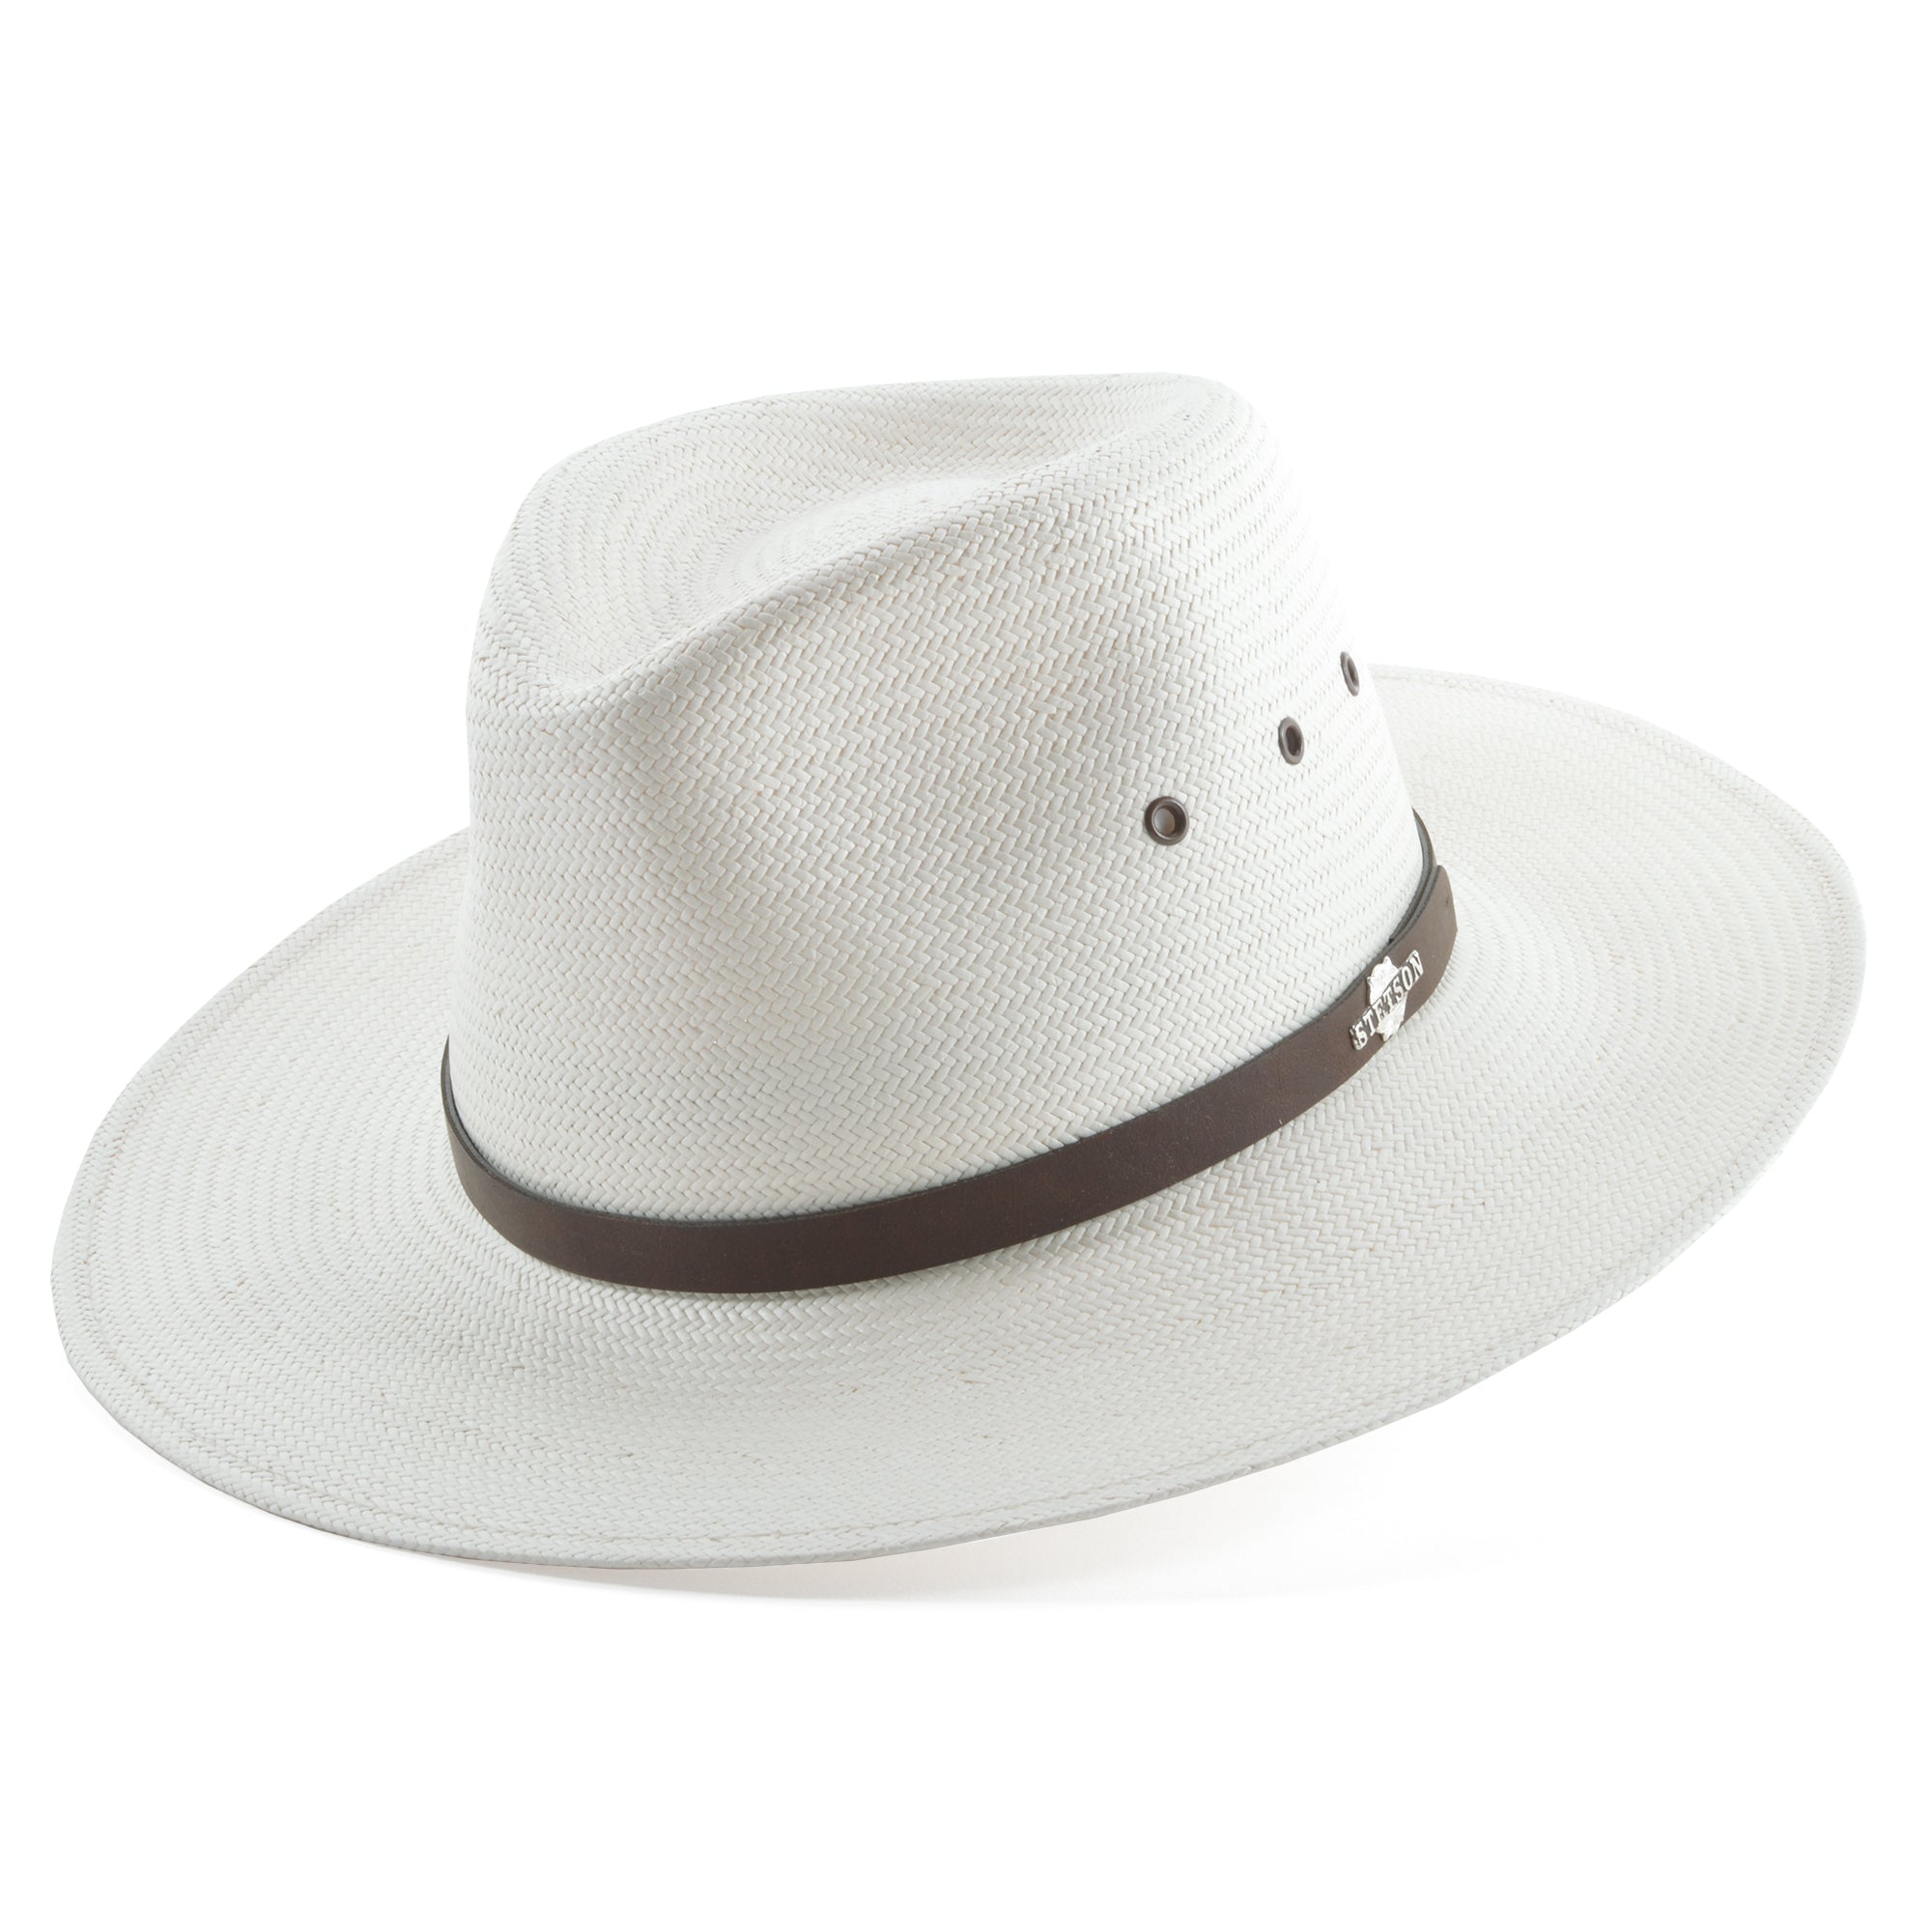 Stetson Ludington Shantung Straw Safari Hat